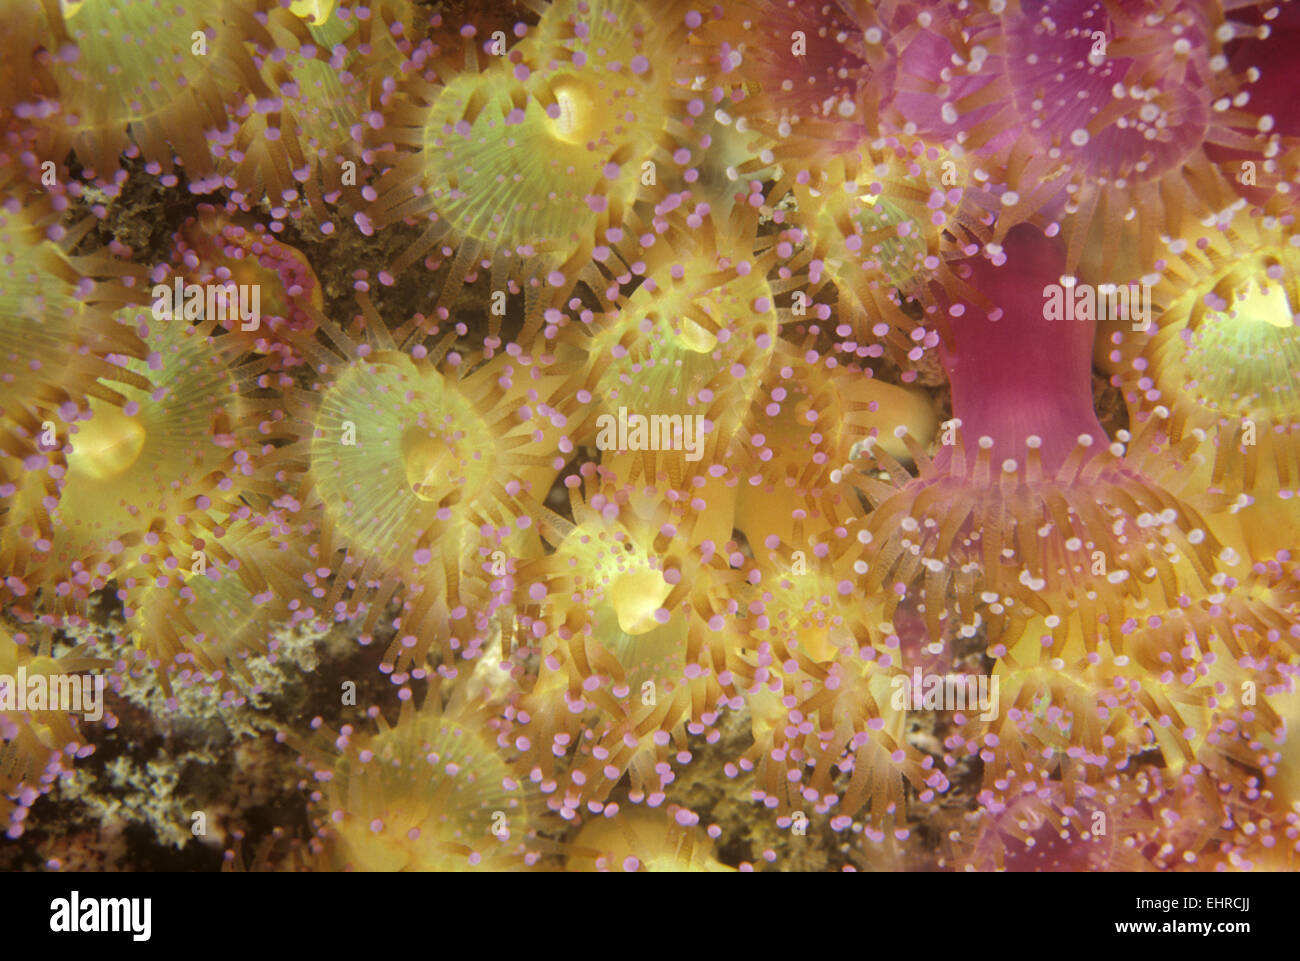 Jewel Anemone - Corynactis viridis Stock Photo